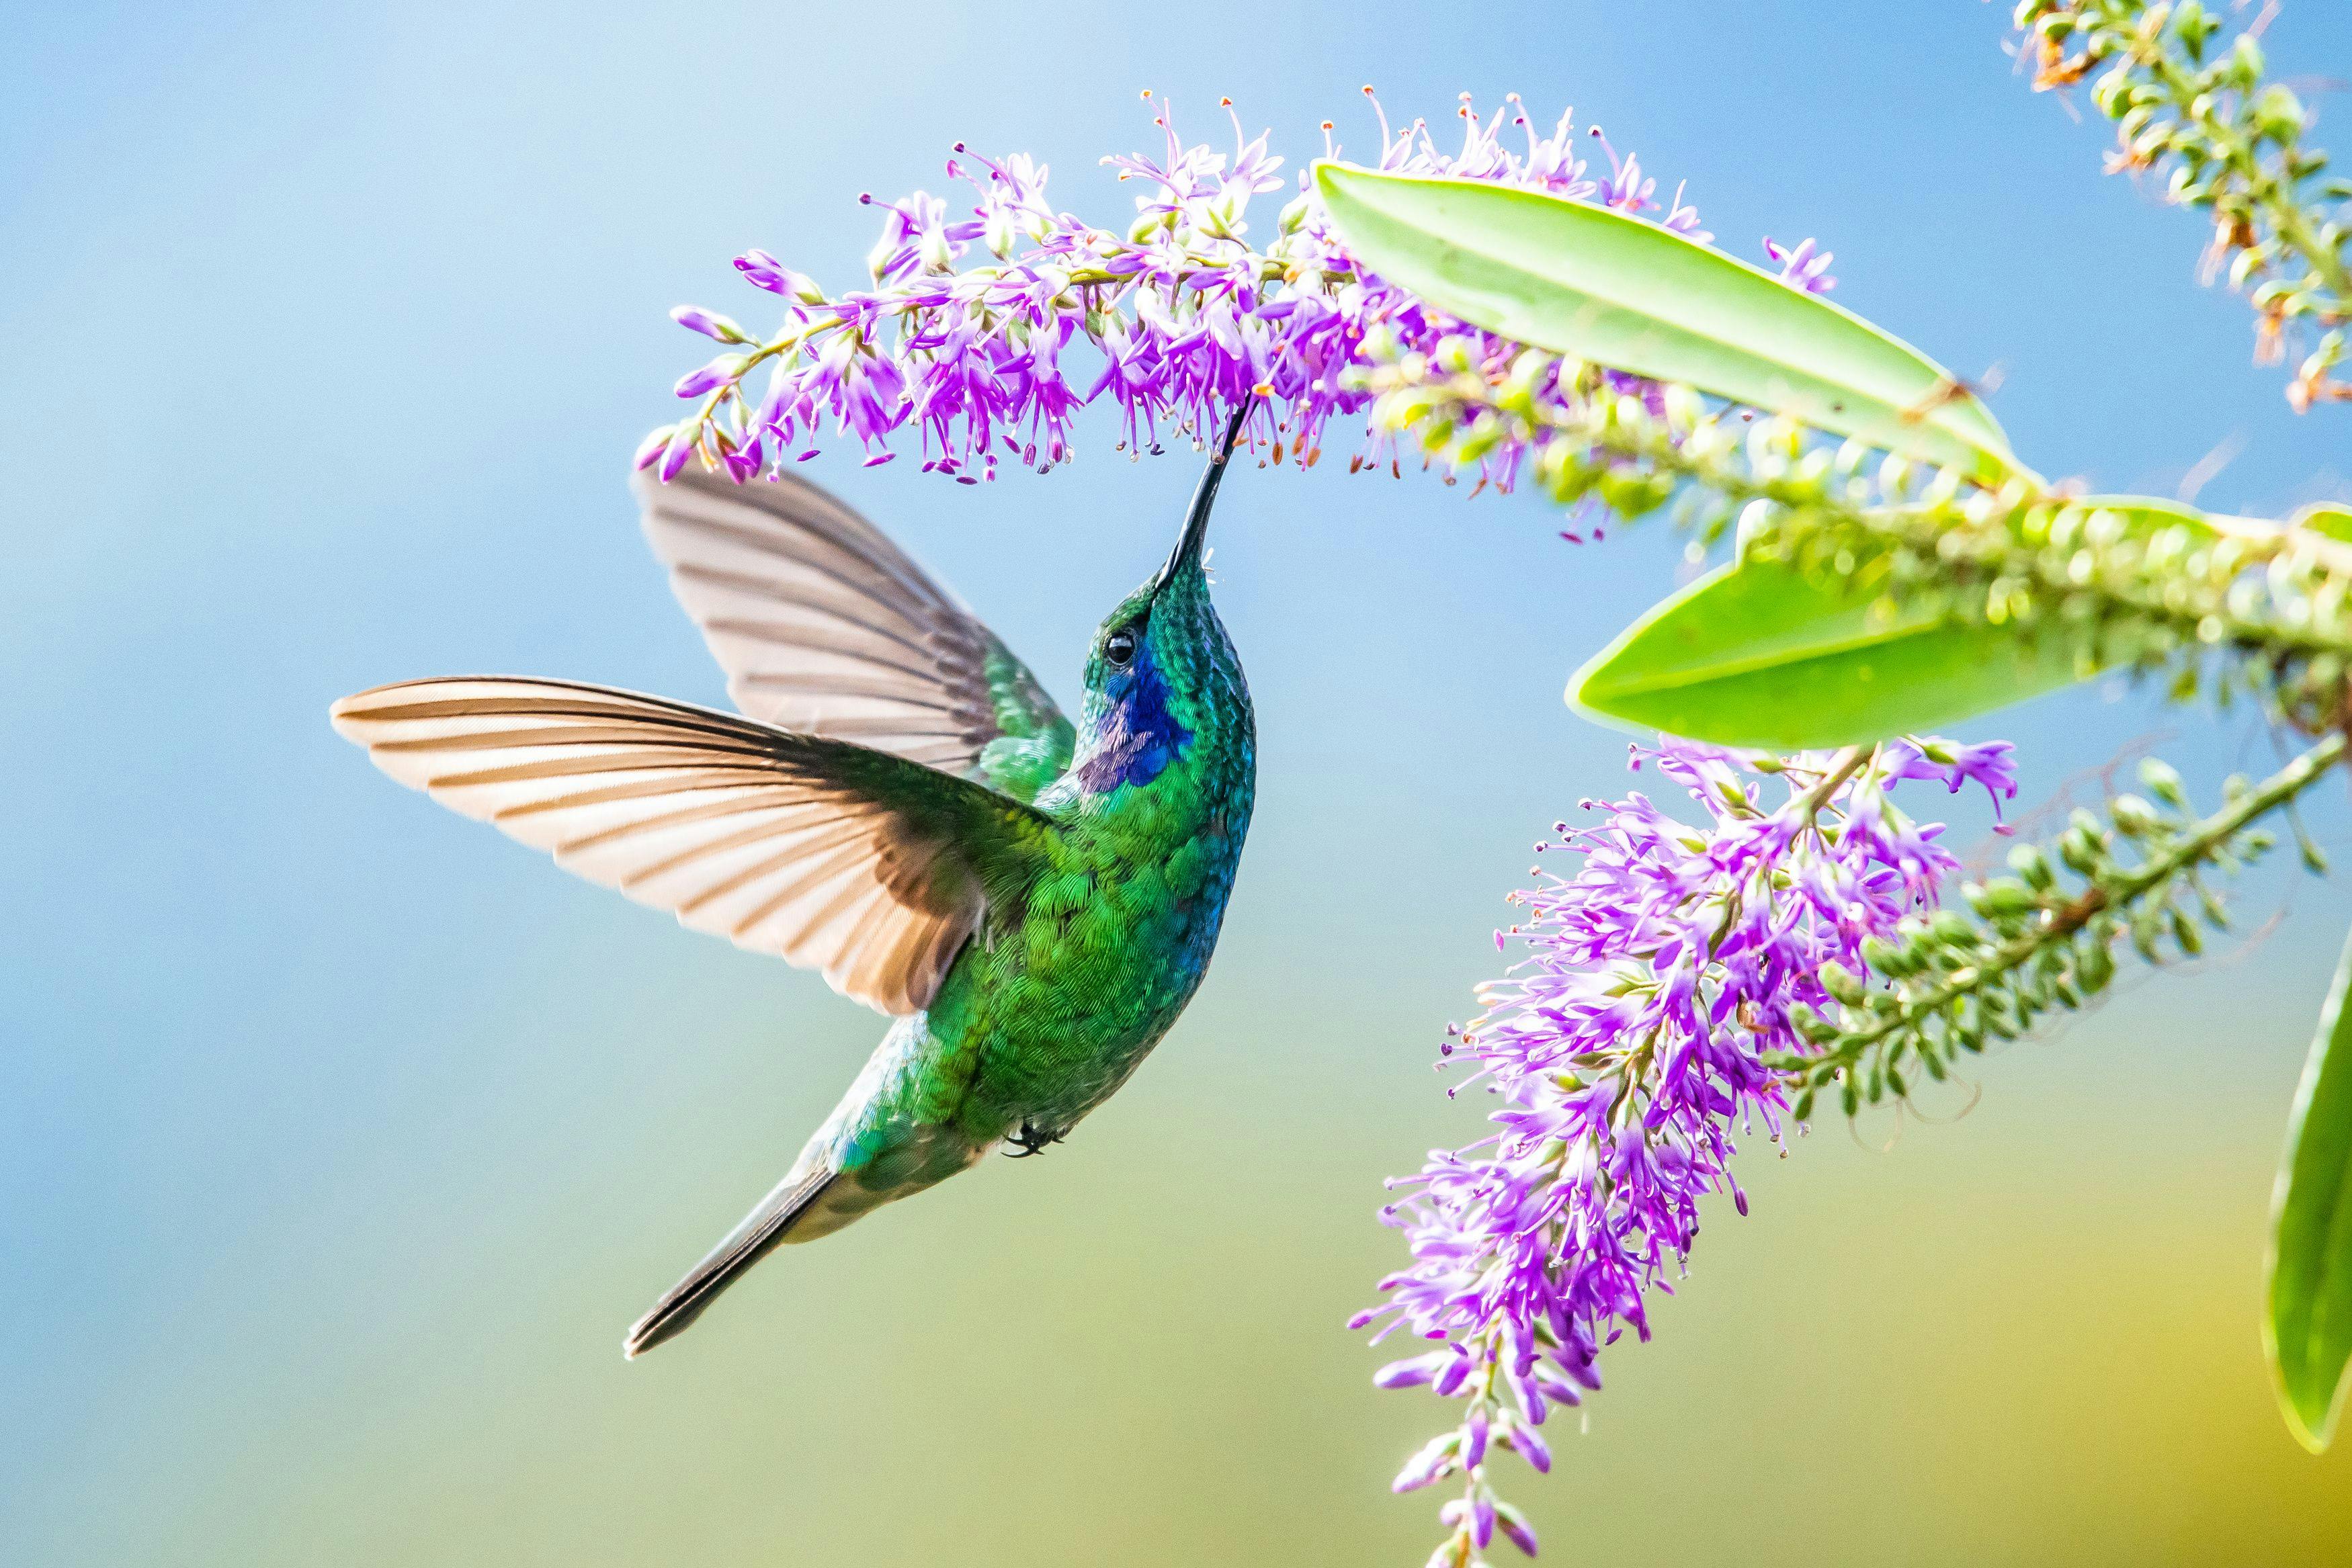 The Hummingbird: A Seduction